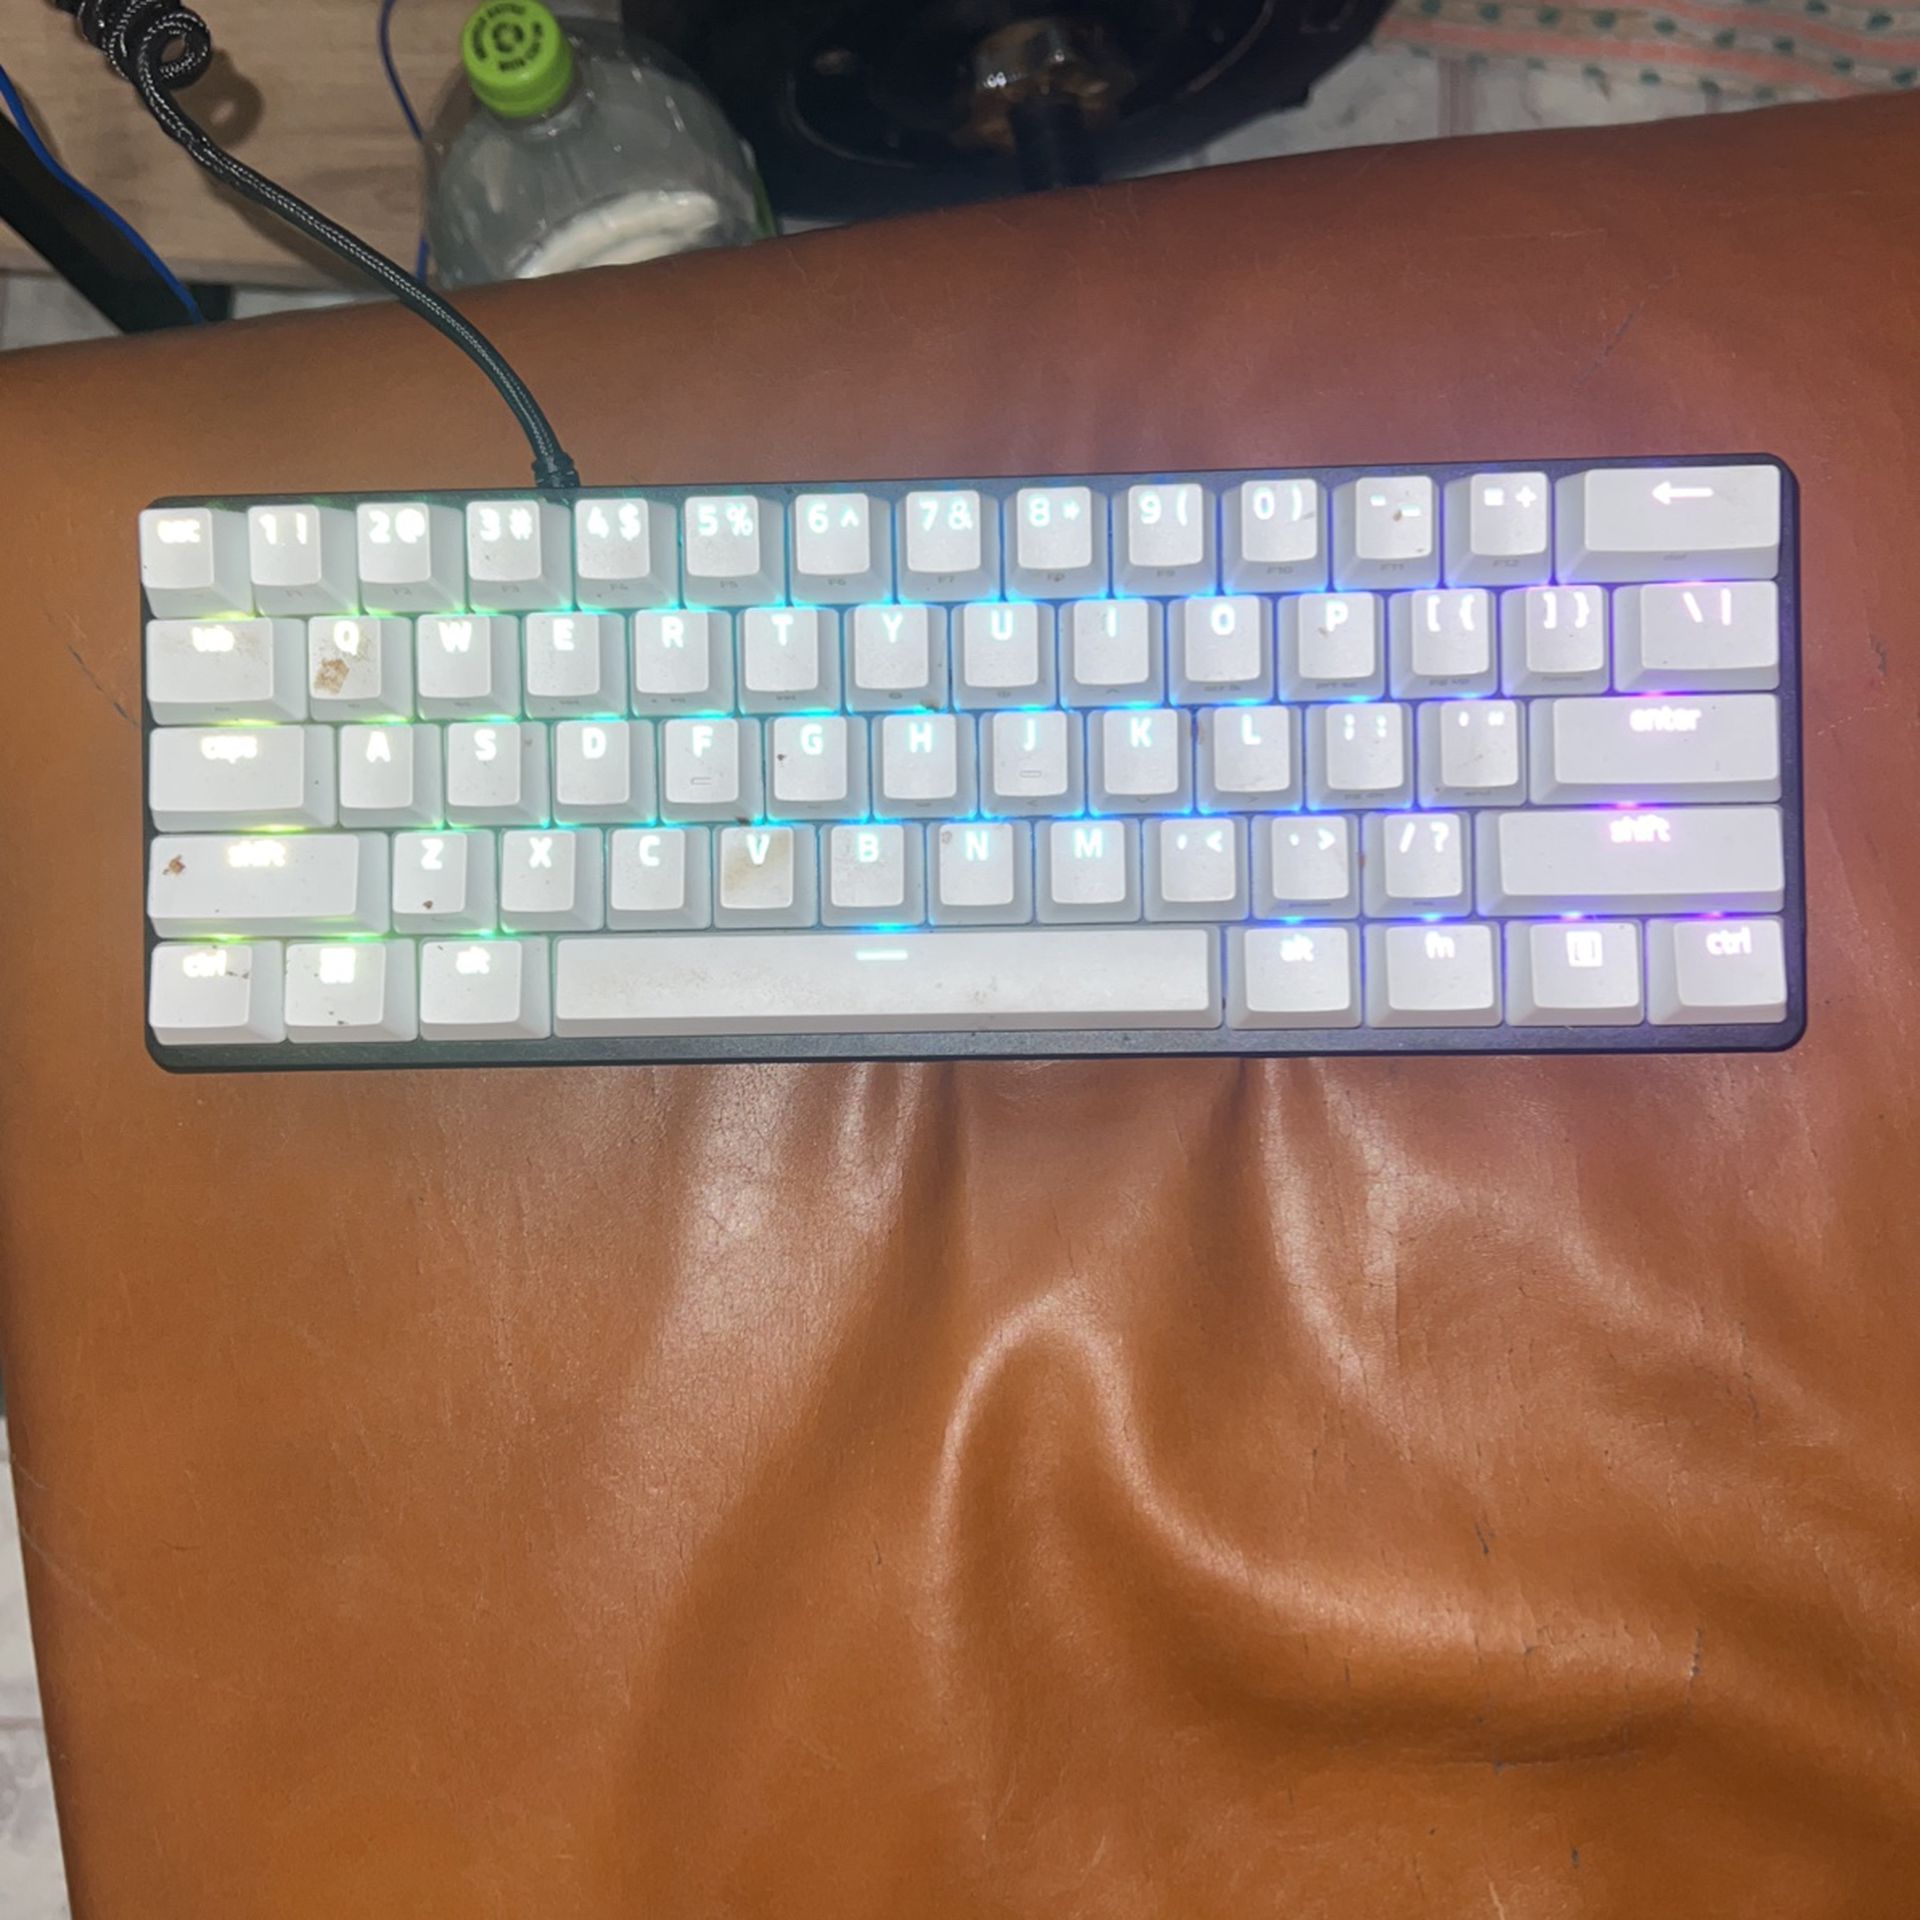 Used Razor Mini Keyboard Still In Good Condition